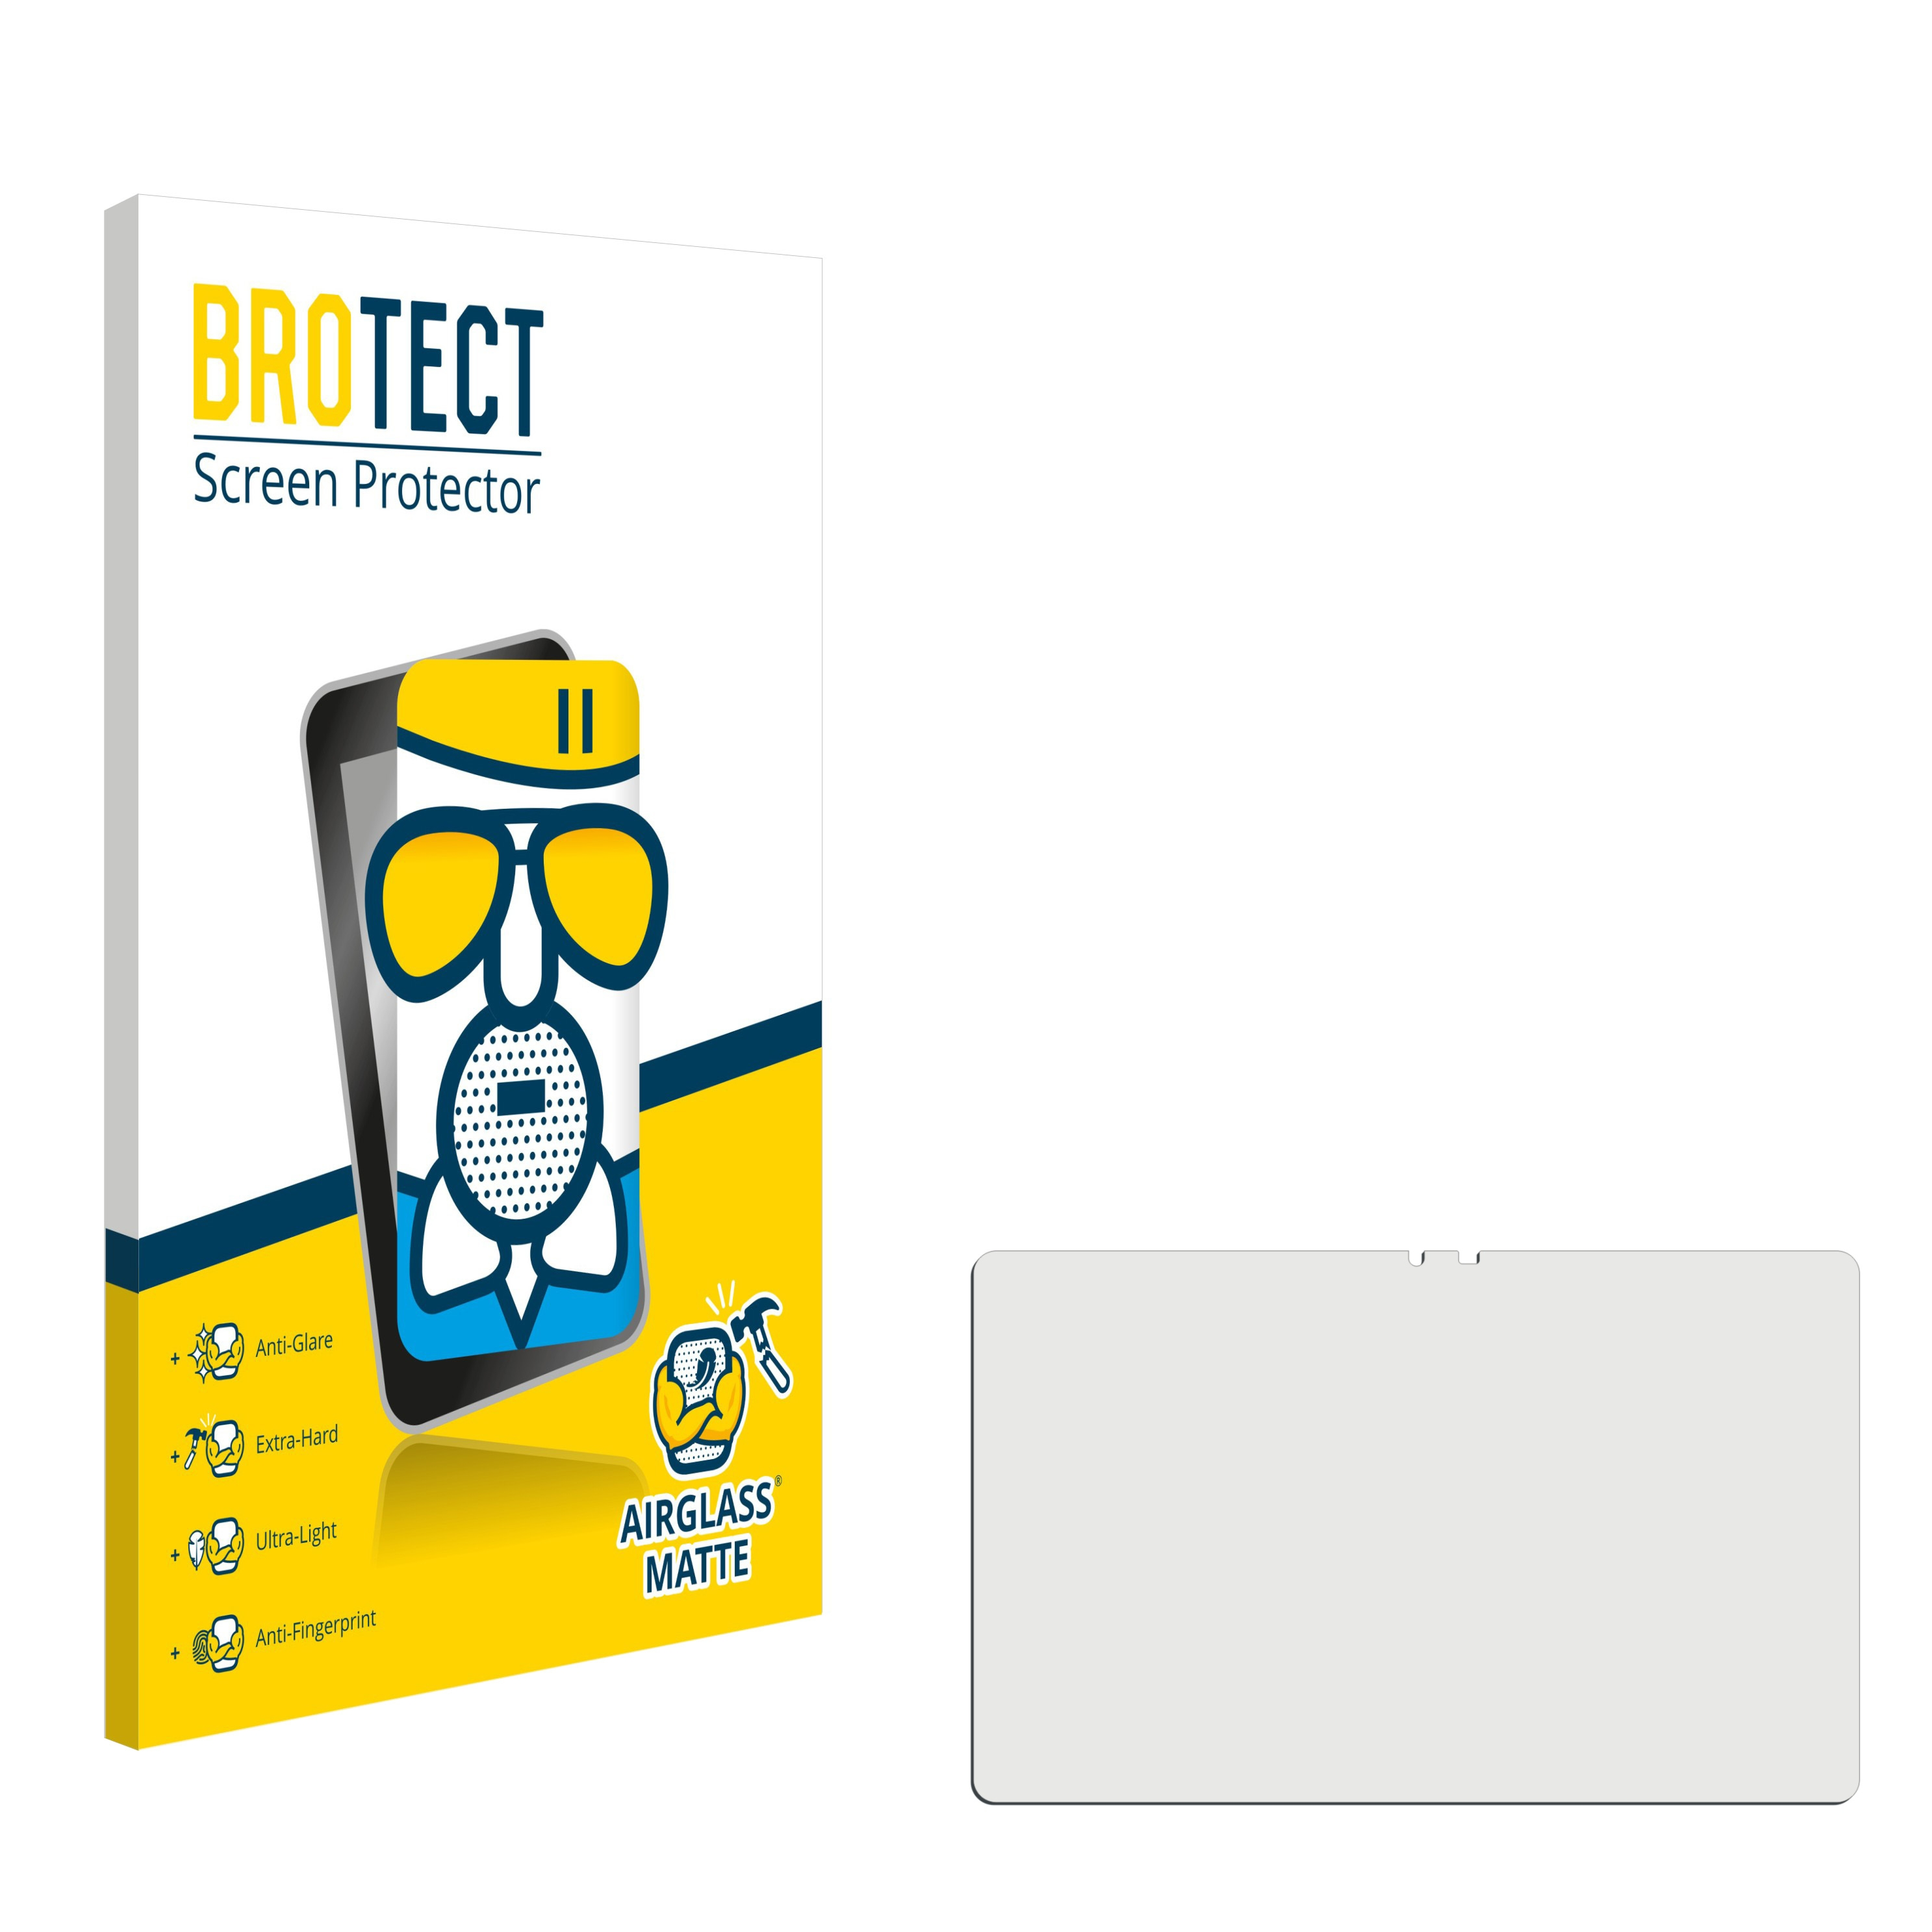 Iconia BROTECT P10) Tab Airglass matte Acer Schutzfolie(für